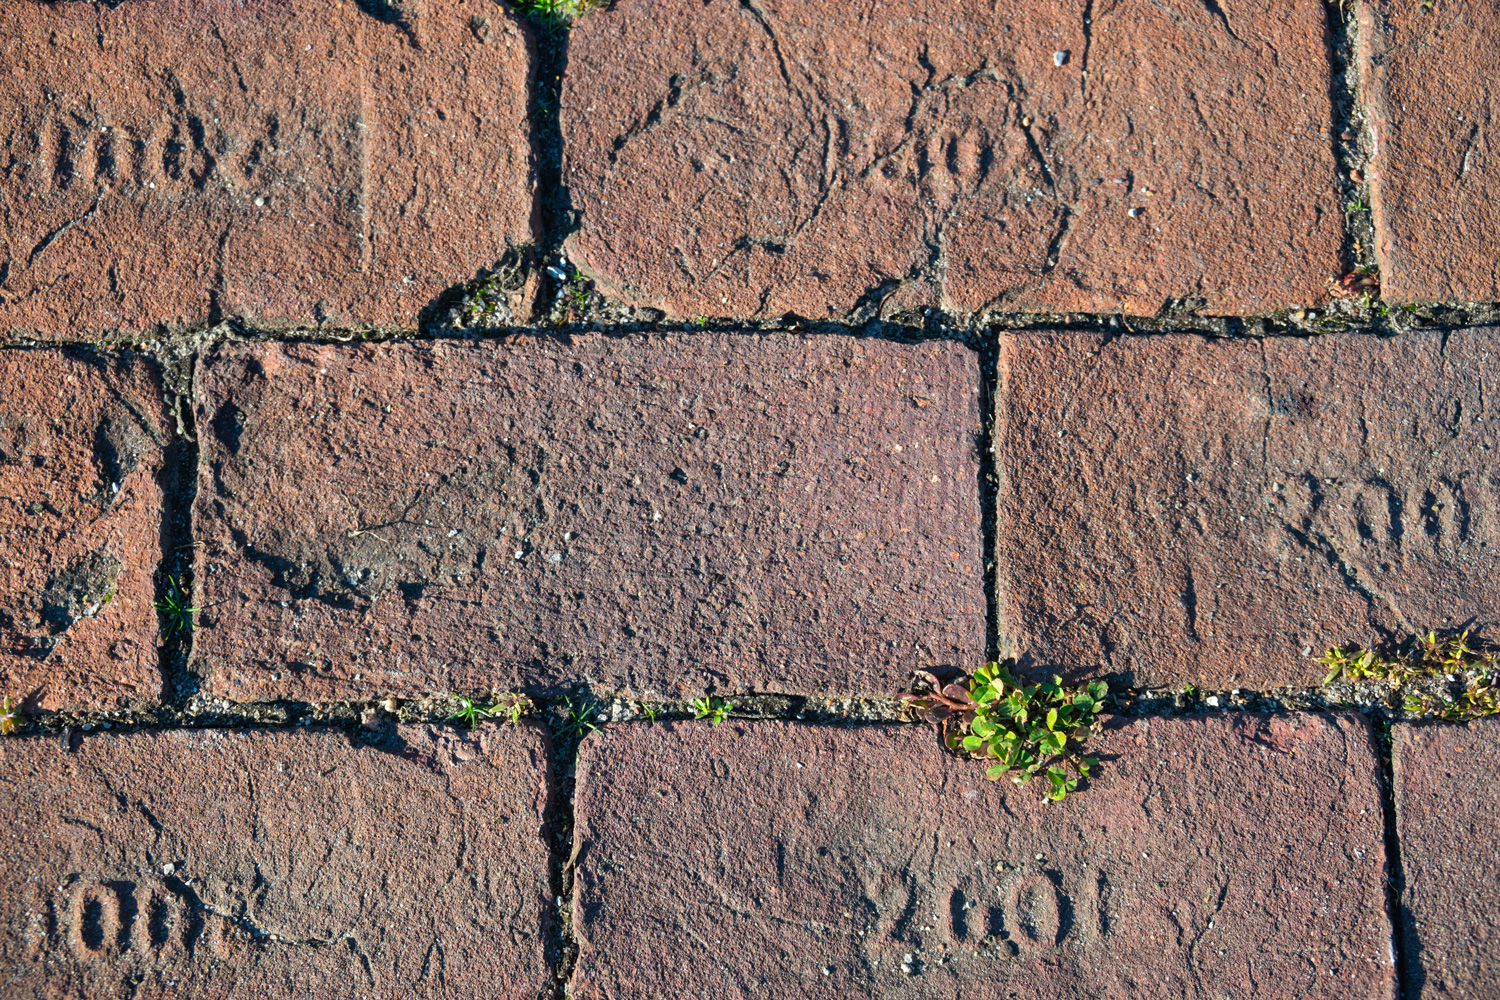 Brick pavers on a public park walkway.